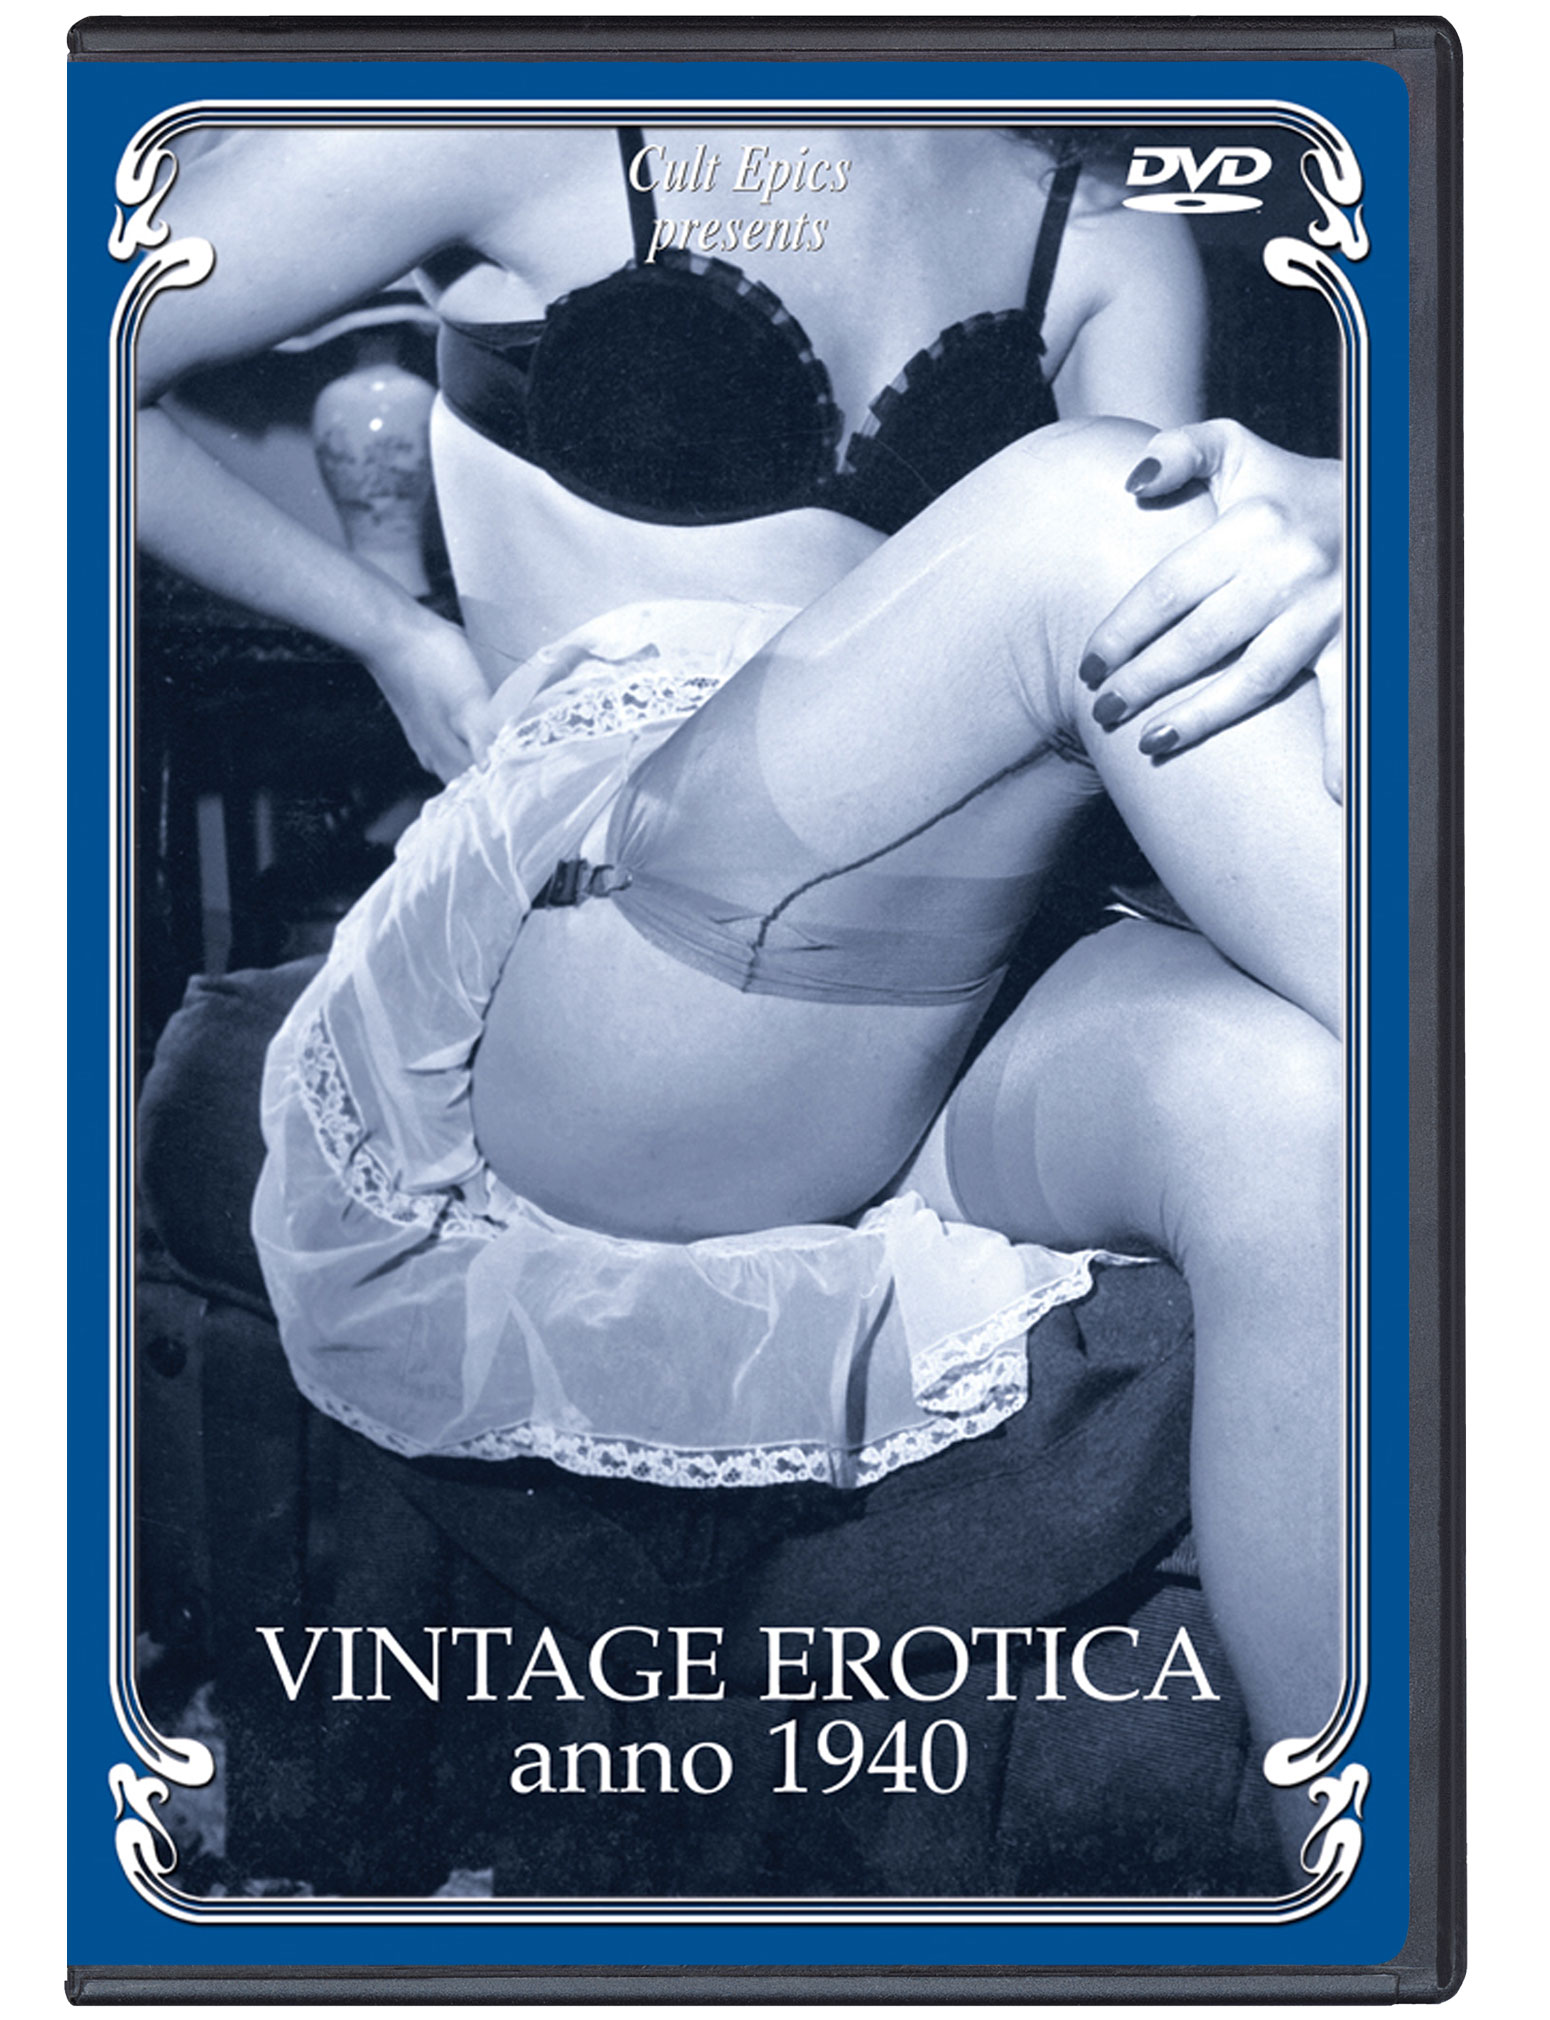 Vintage Erotica Anno - Vintage Erotica Anno 1940 â€“ Cult Epics